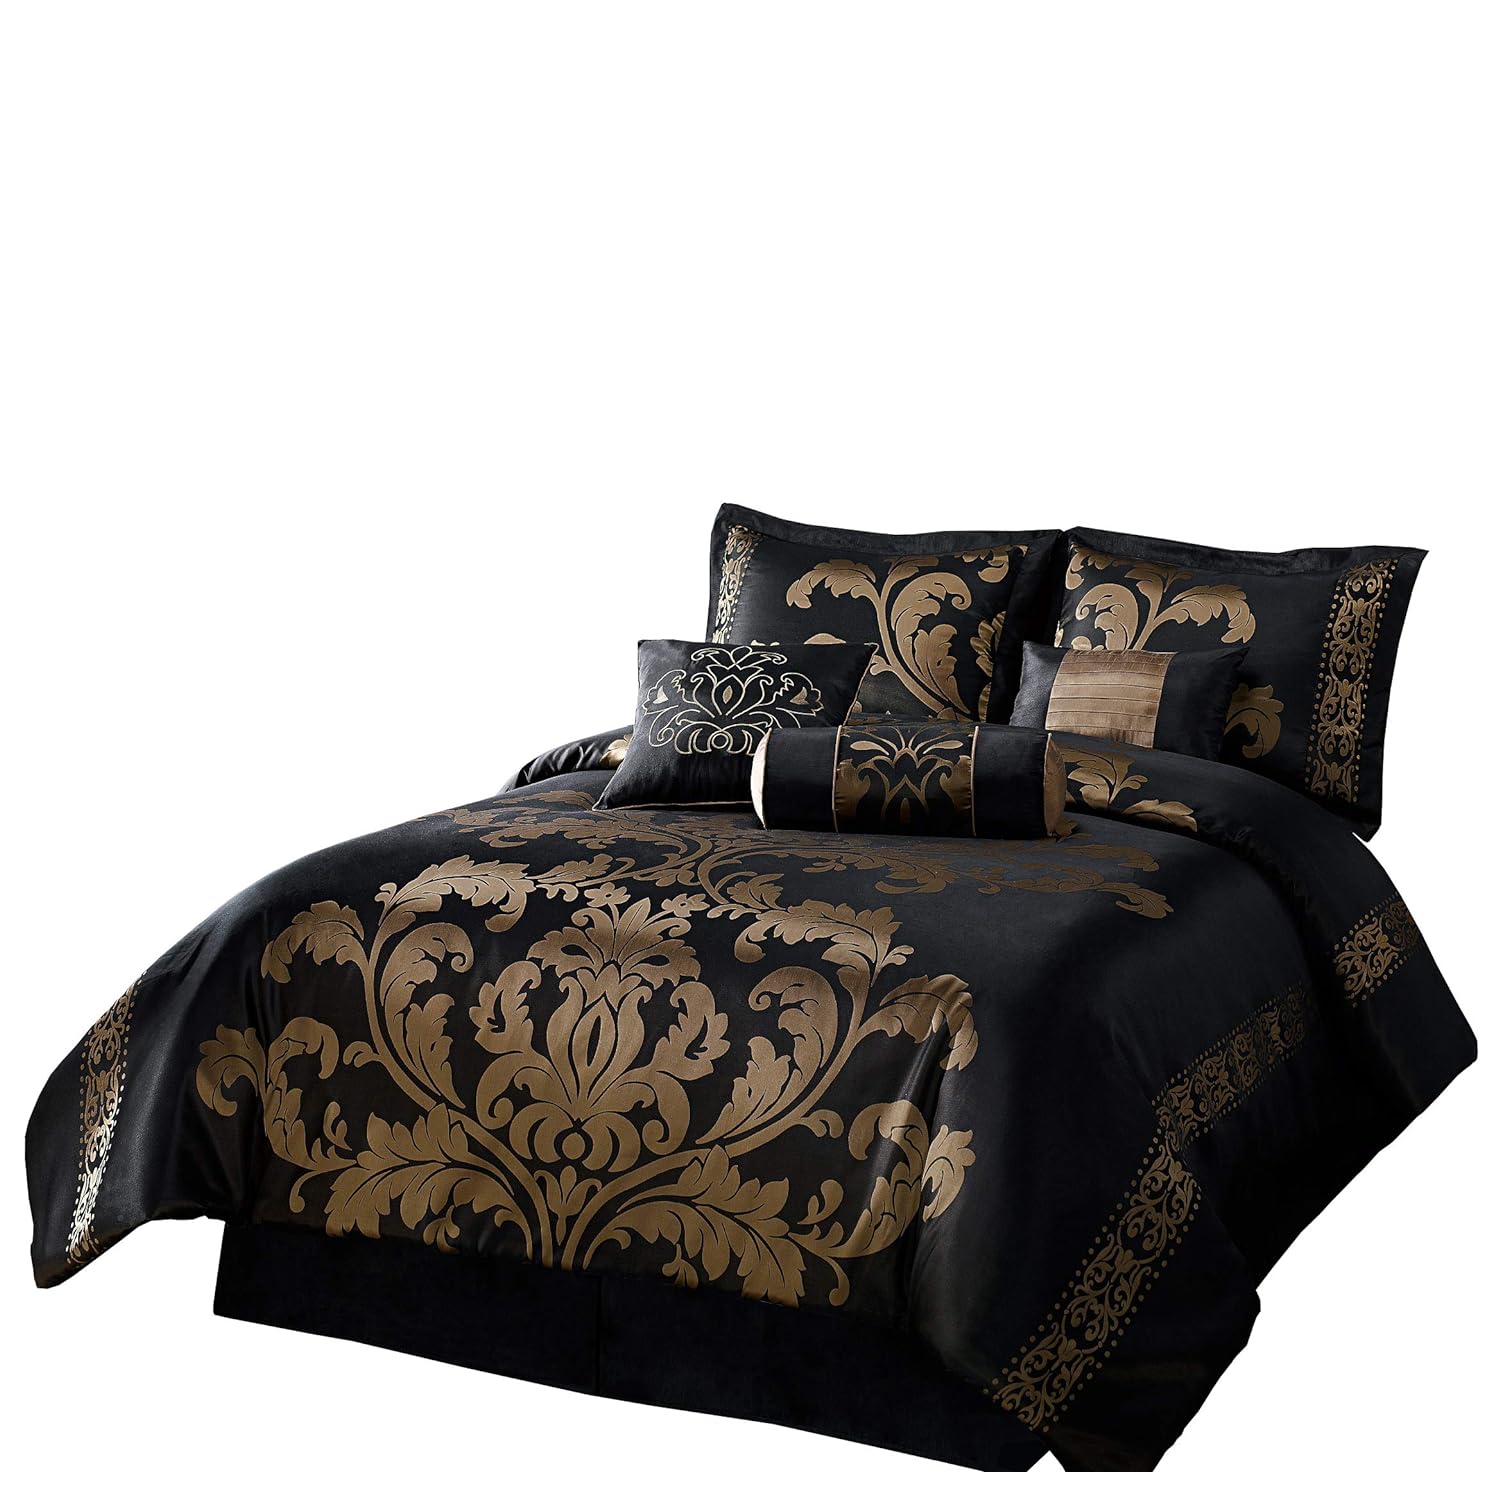 Chezmoi Collection 7Piece Jacquard Floral Comforter Set/BedInABag Set, King, Black Gold